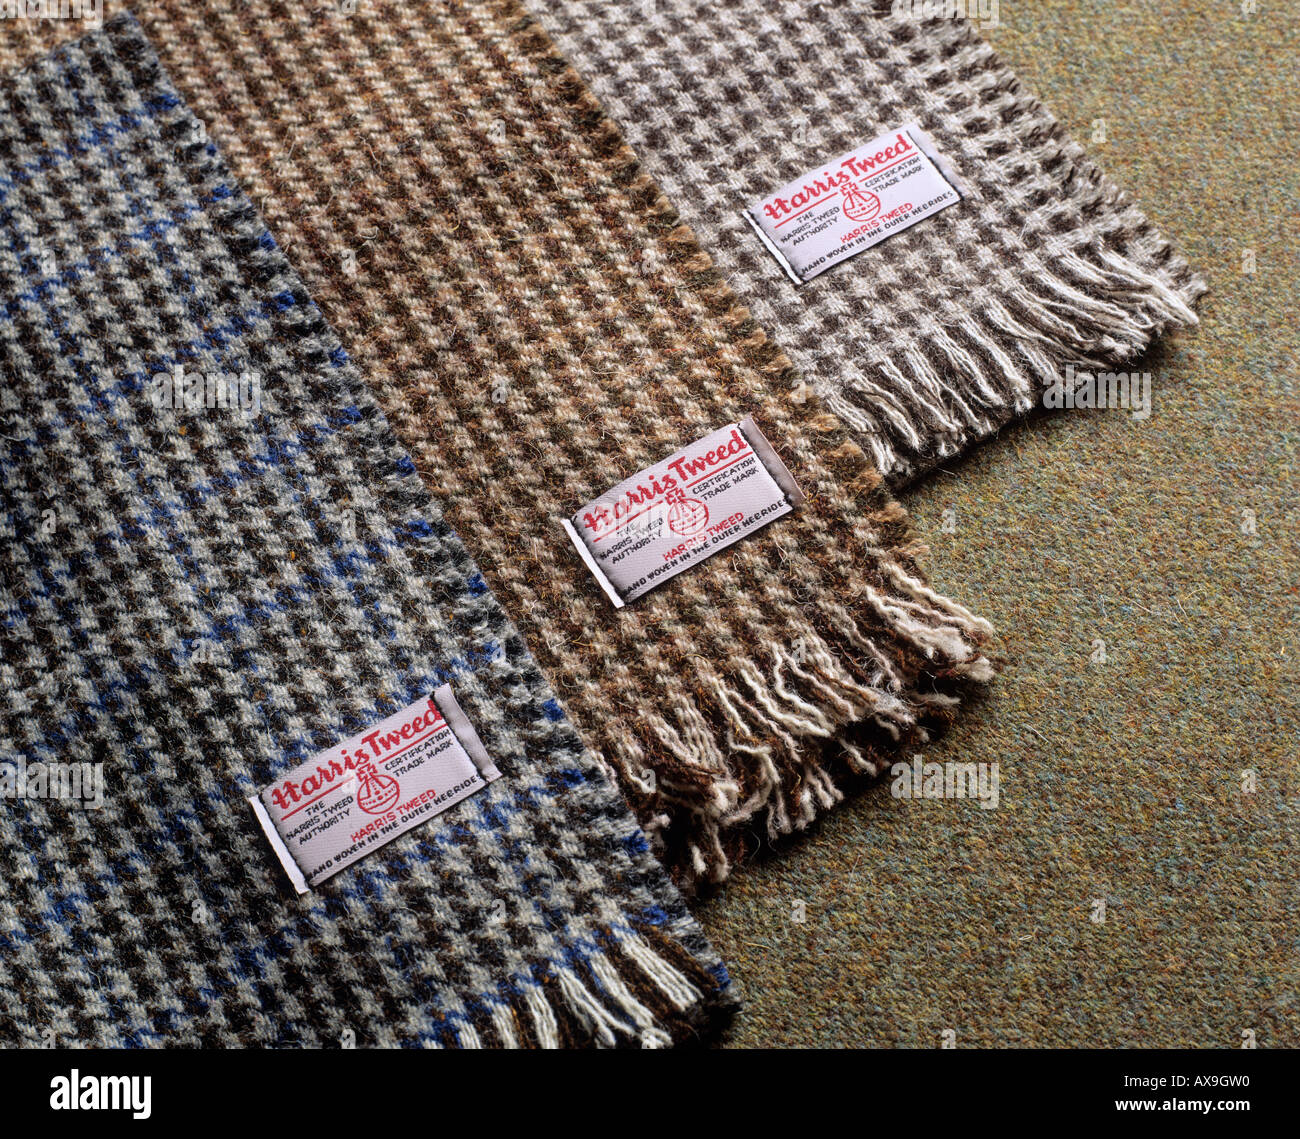 Harris Tweed cloth samples Stock Photo - Alamy